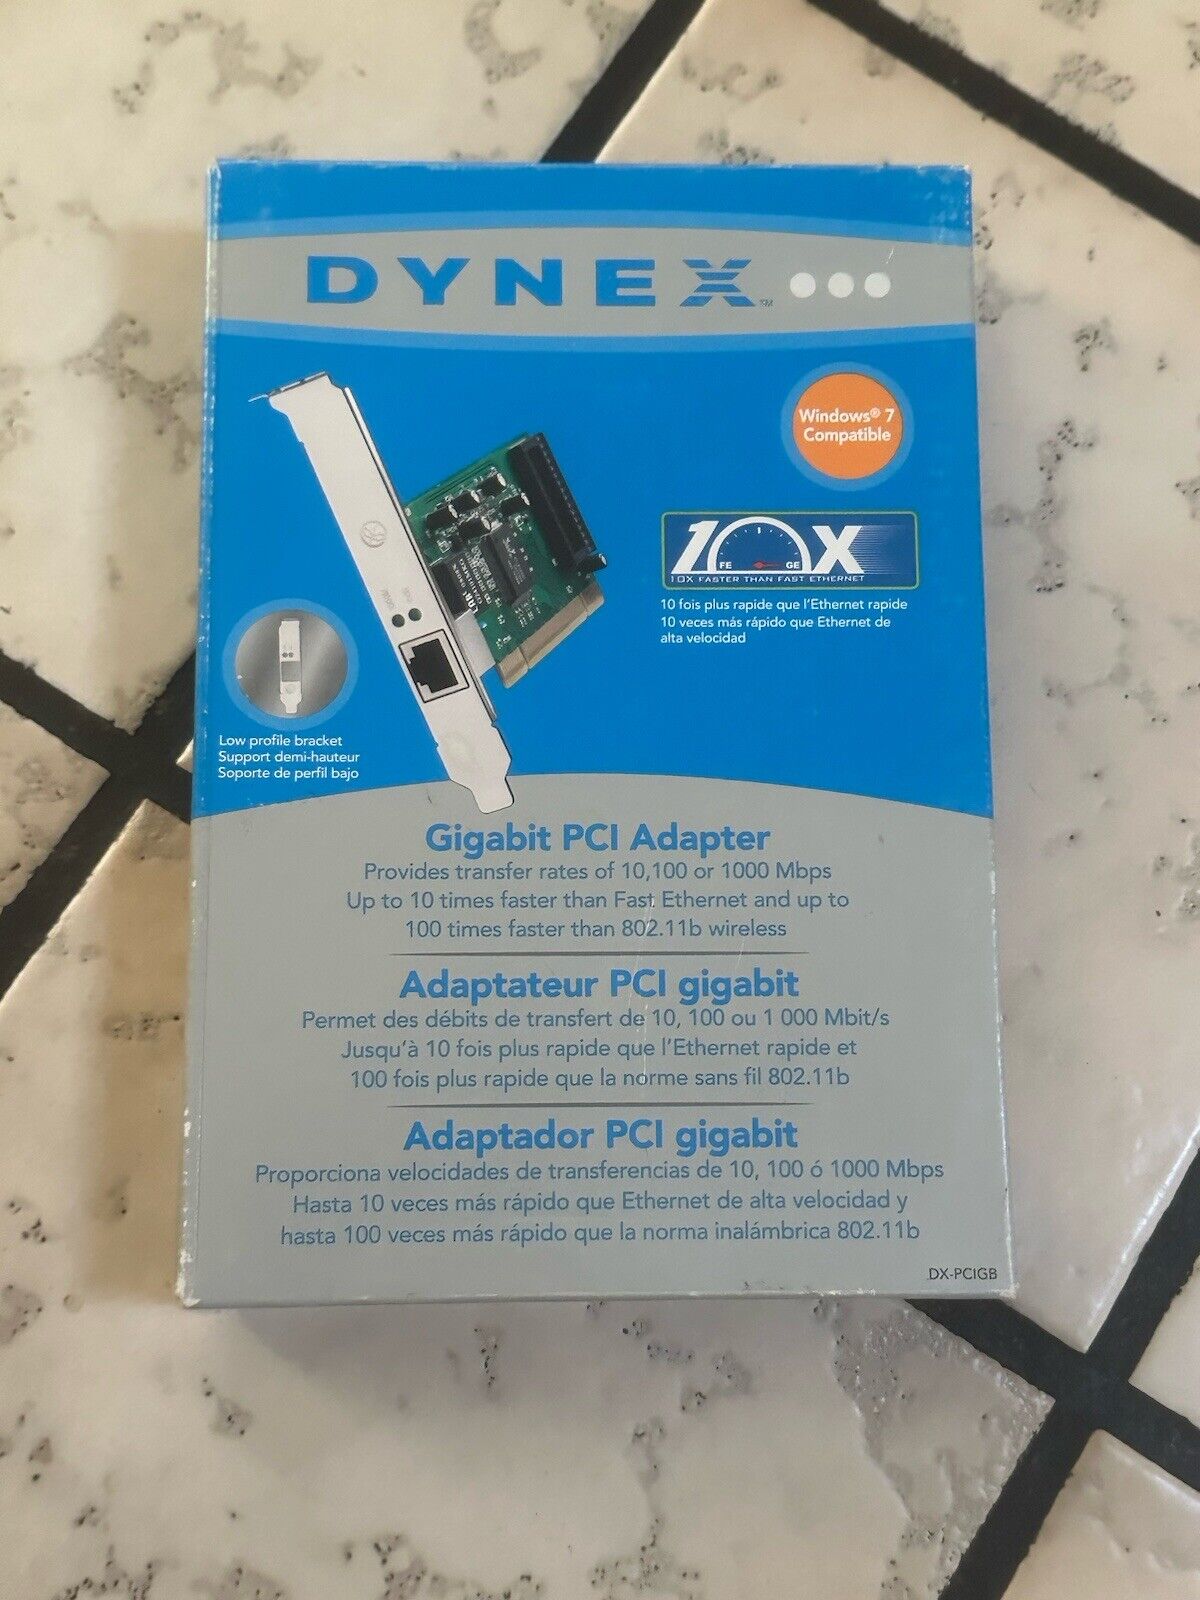 Dynex - Gigabit PCI Desktop Adapter DX-PCIGB